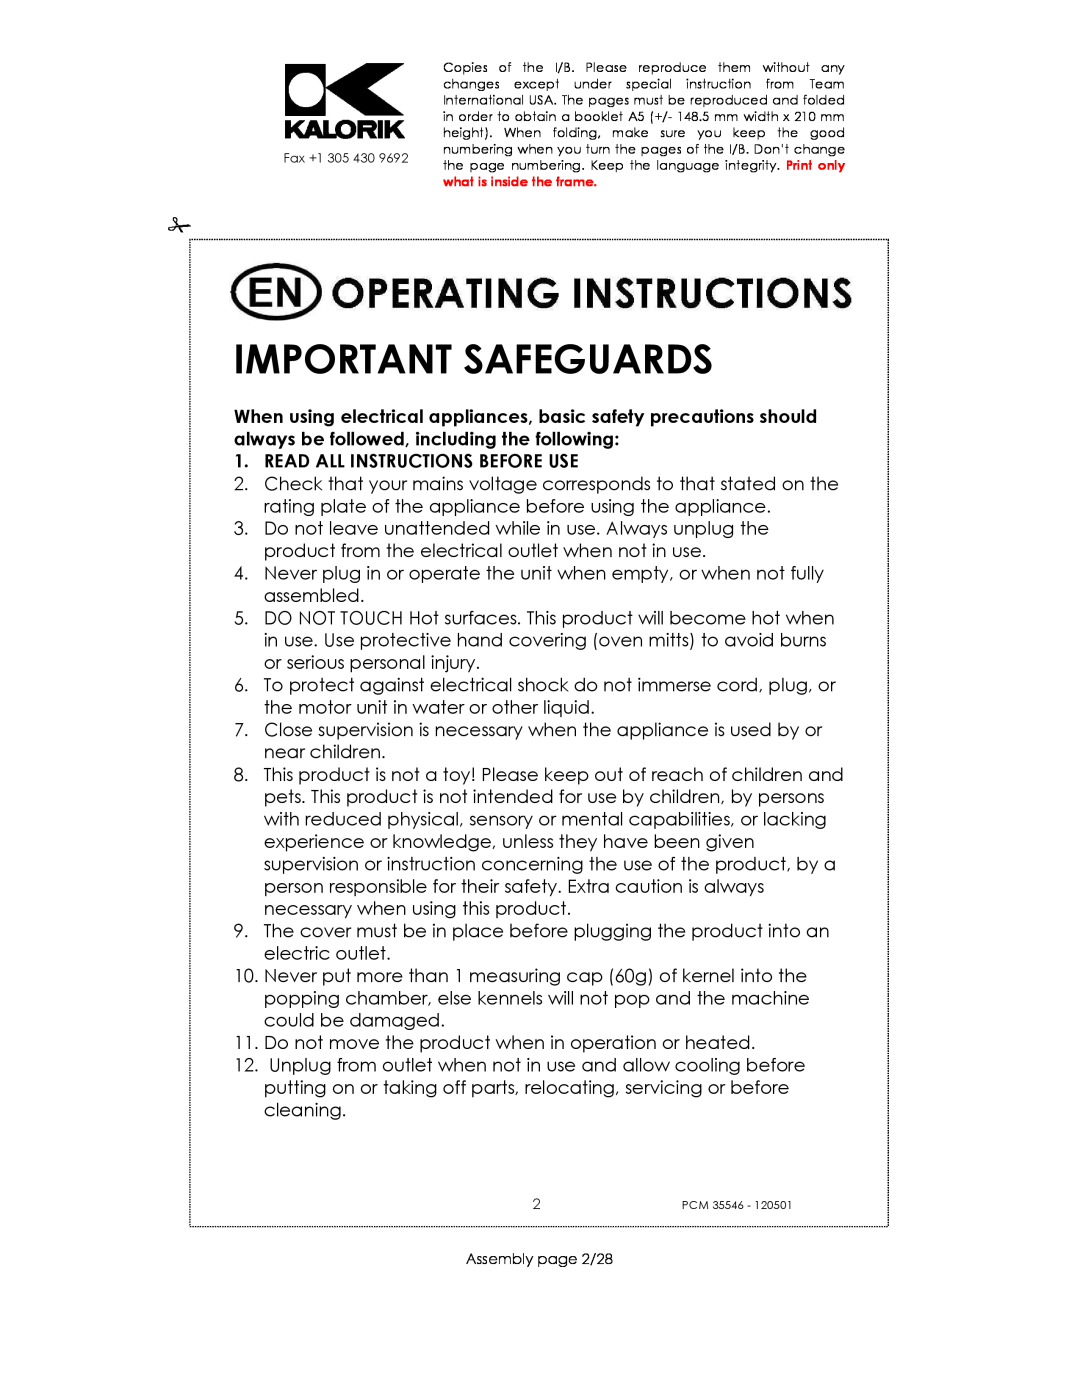 Kalorik PCM 35546 manual Important Safeguards, Read All Instructions Before Use 